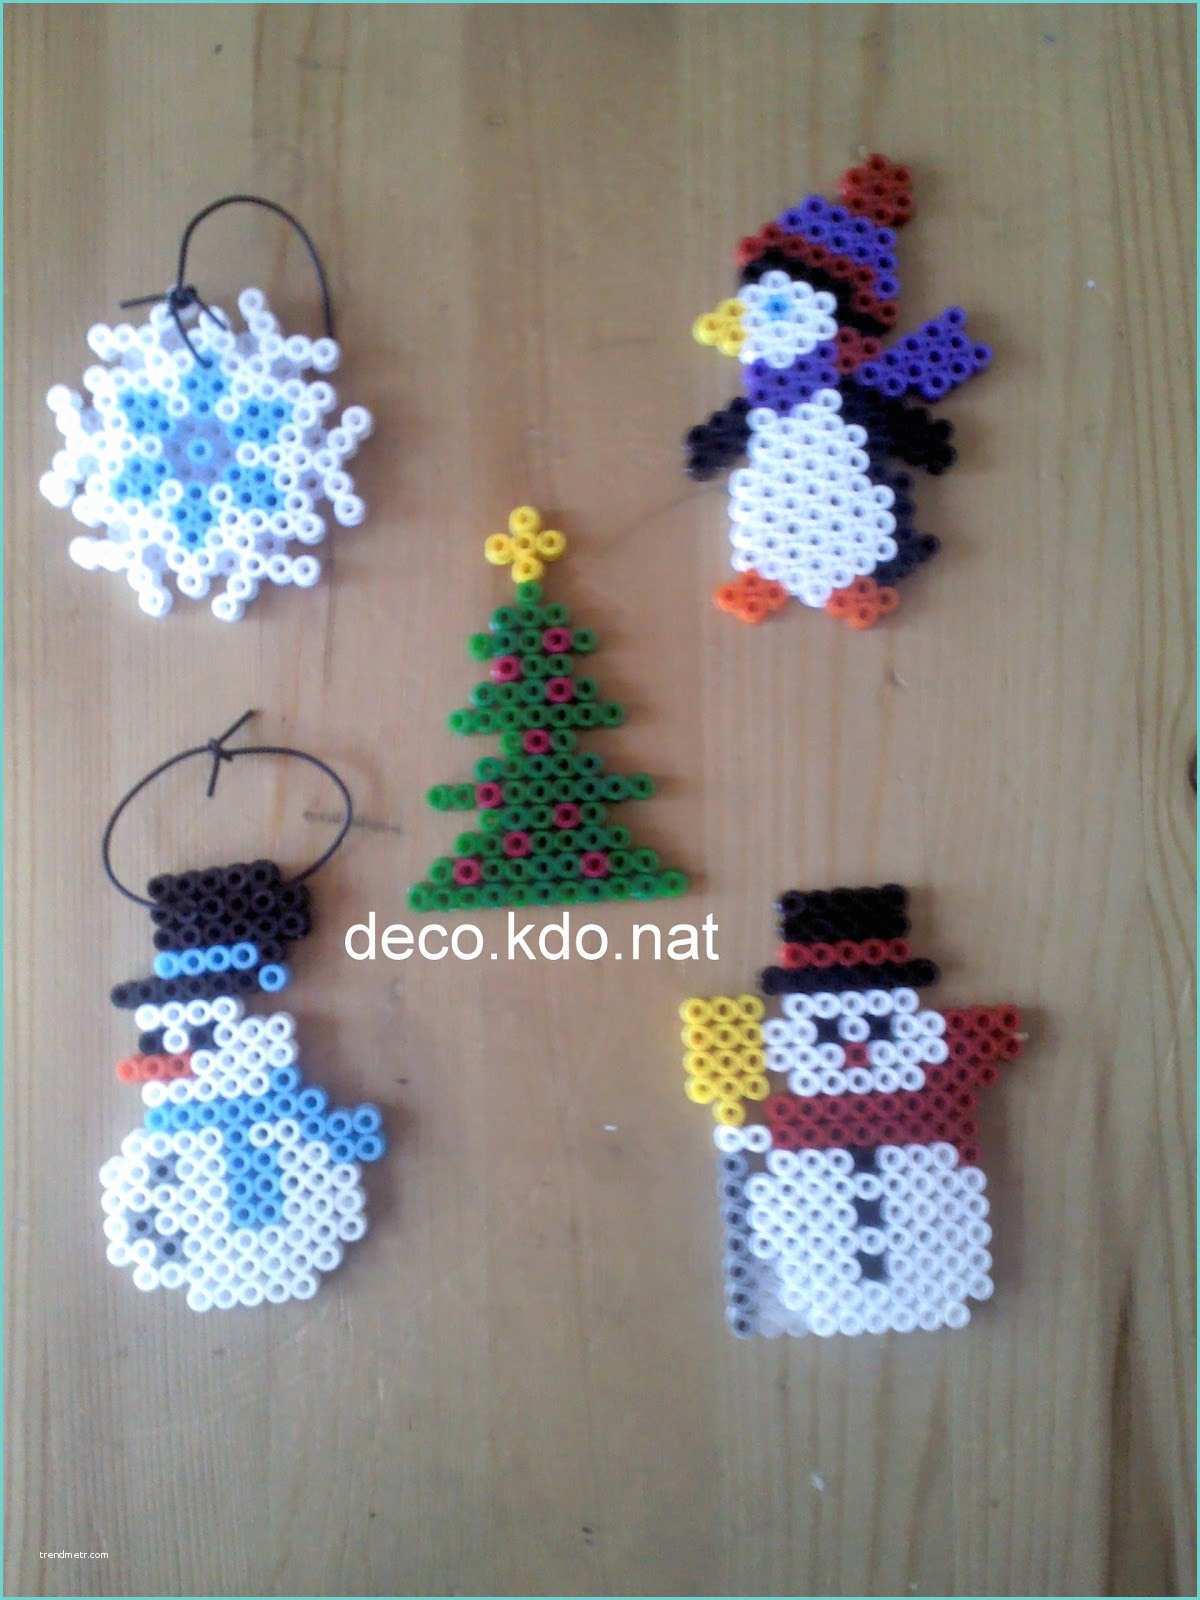 Pixel Sapin De Noel Deco Kdo Nat Perles Hama Deco Noel Pingouins Bonhomme